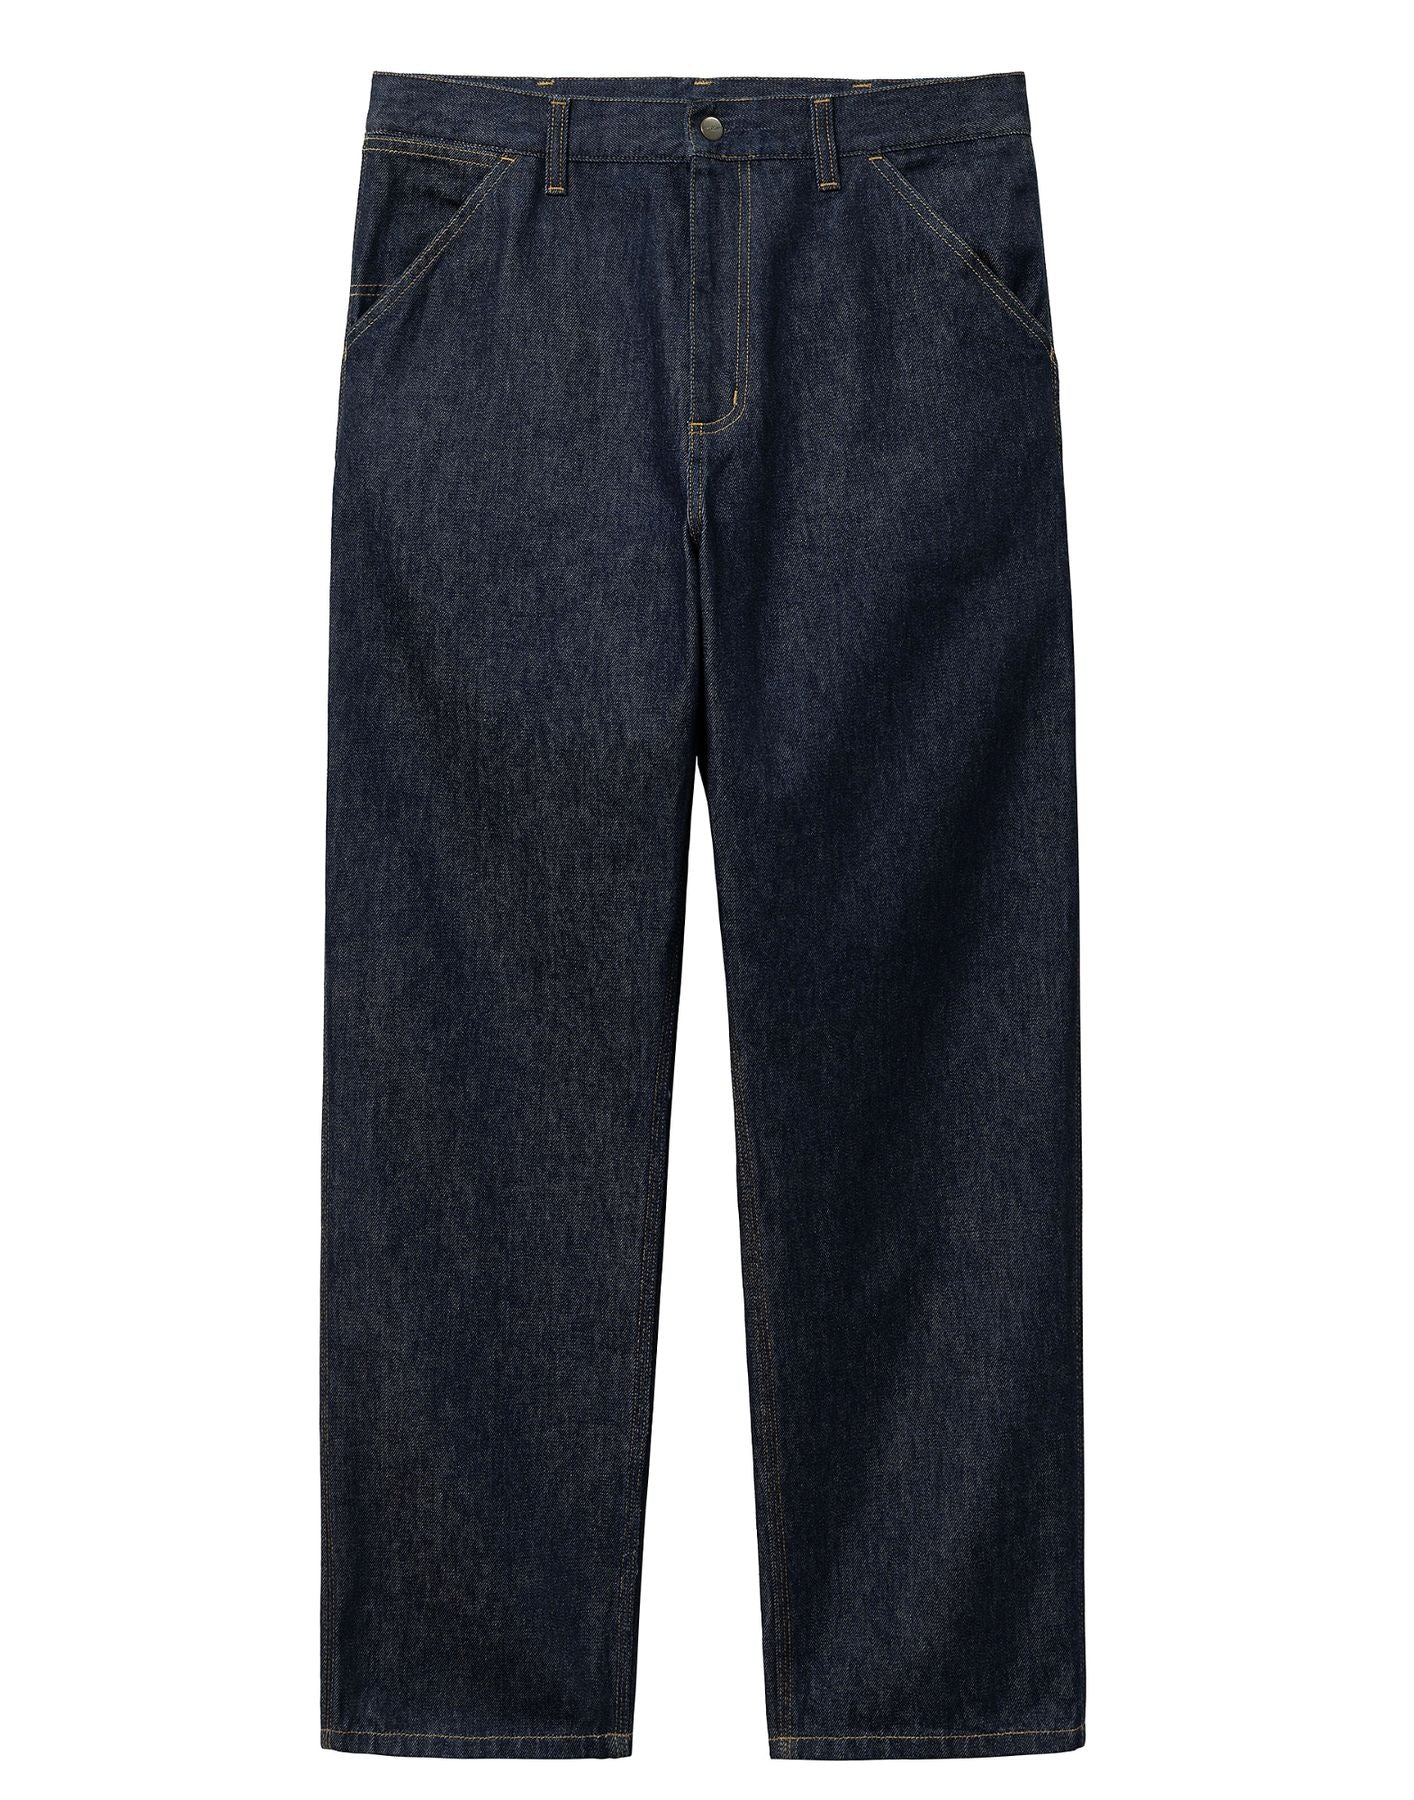 Jeans da uomo i032024 blu slavato CARHARTT WIP